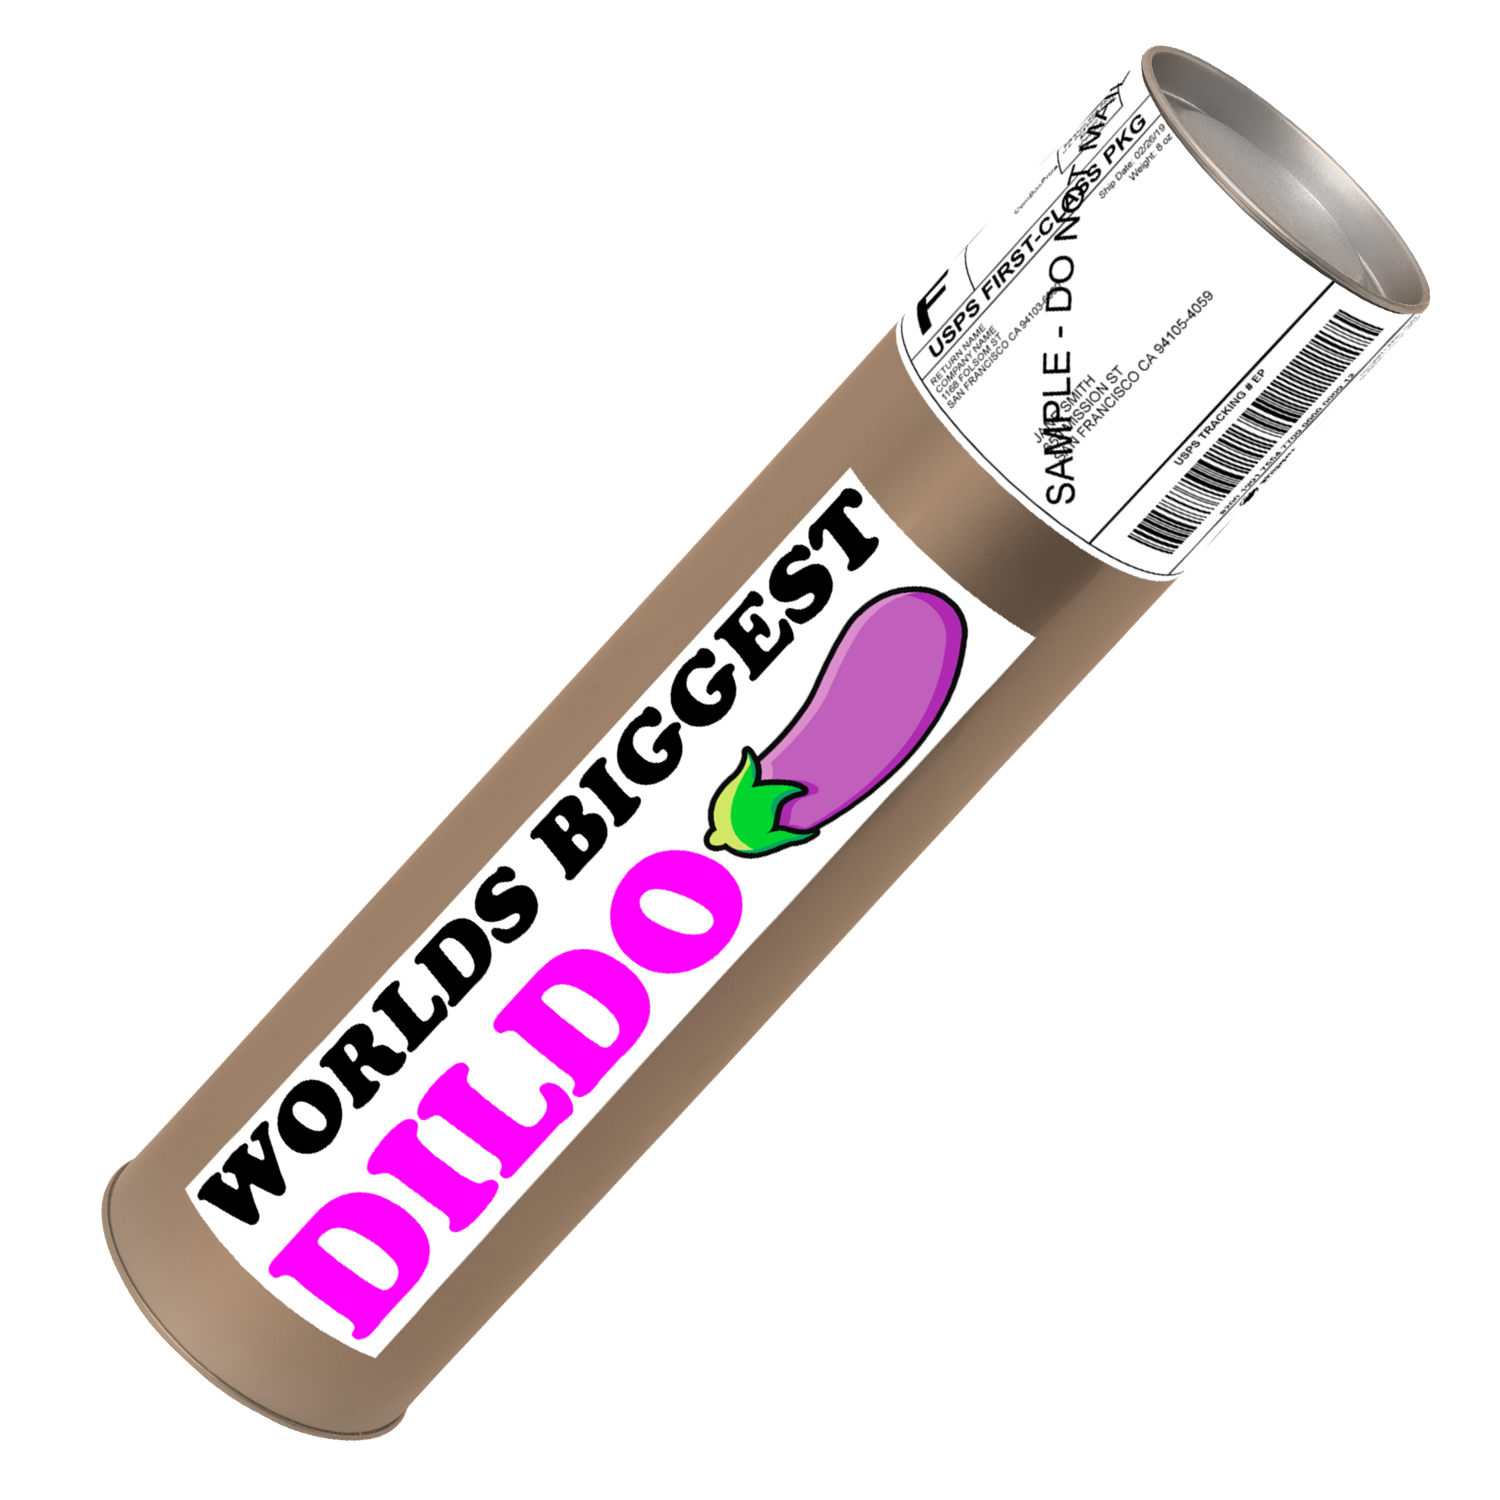 Worlds Biggest Dildo Prank Package Tube